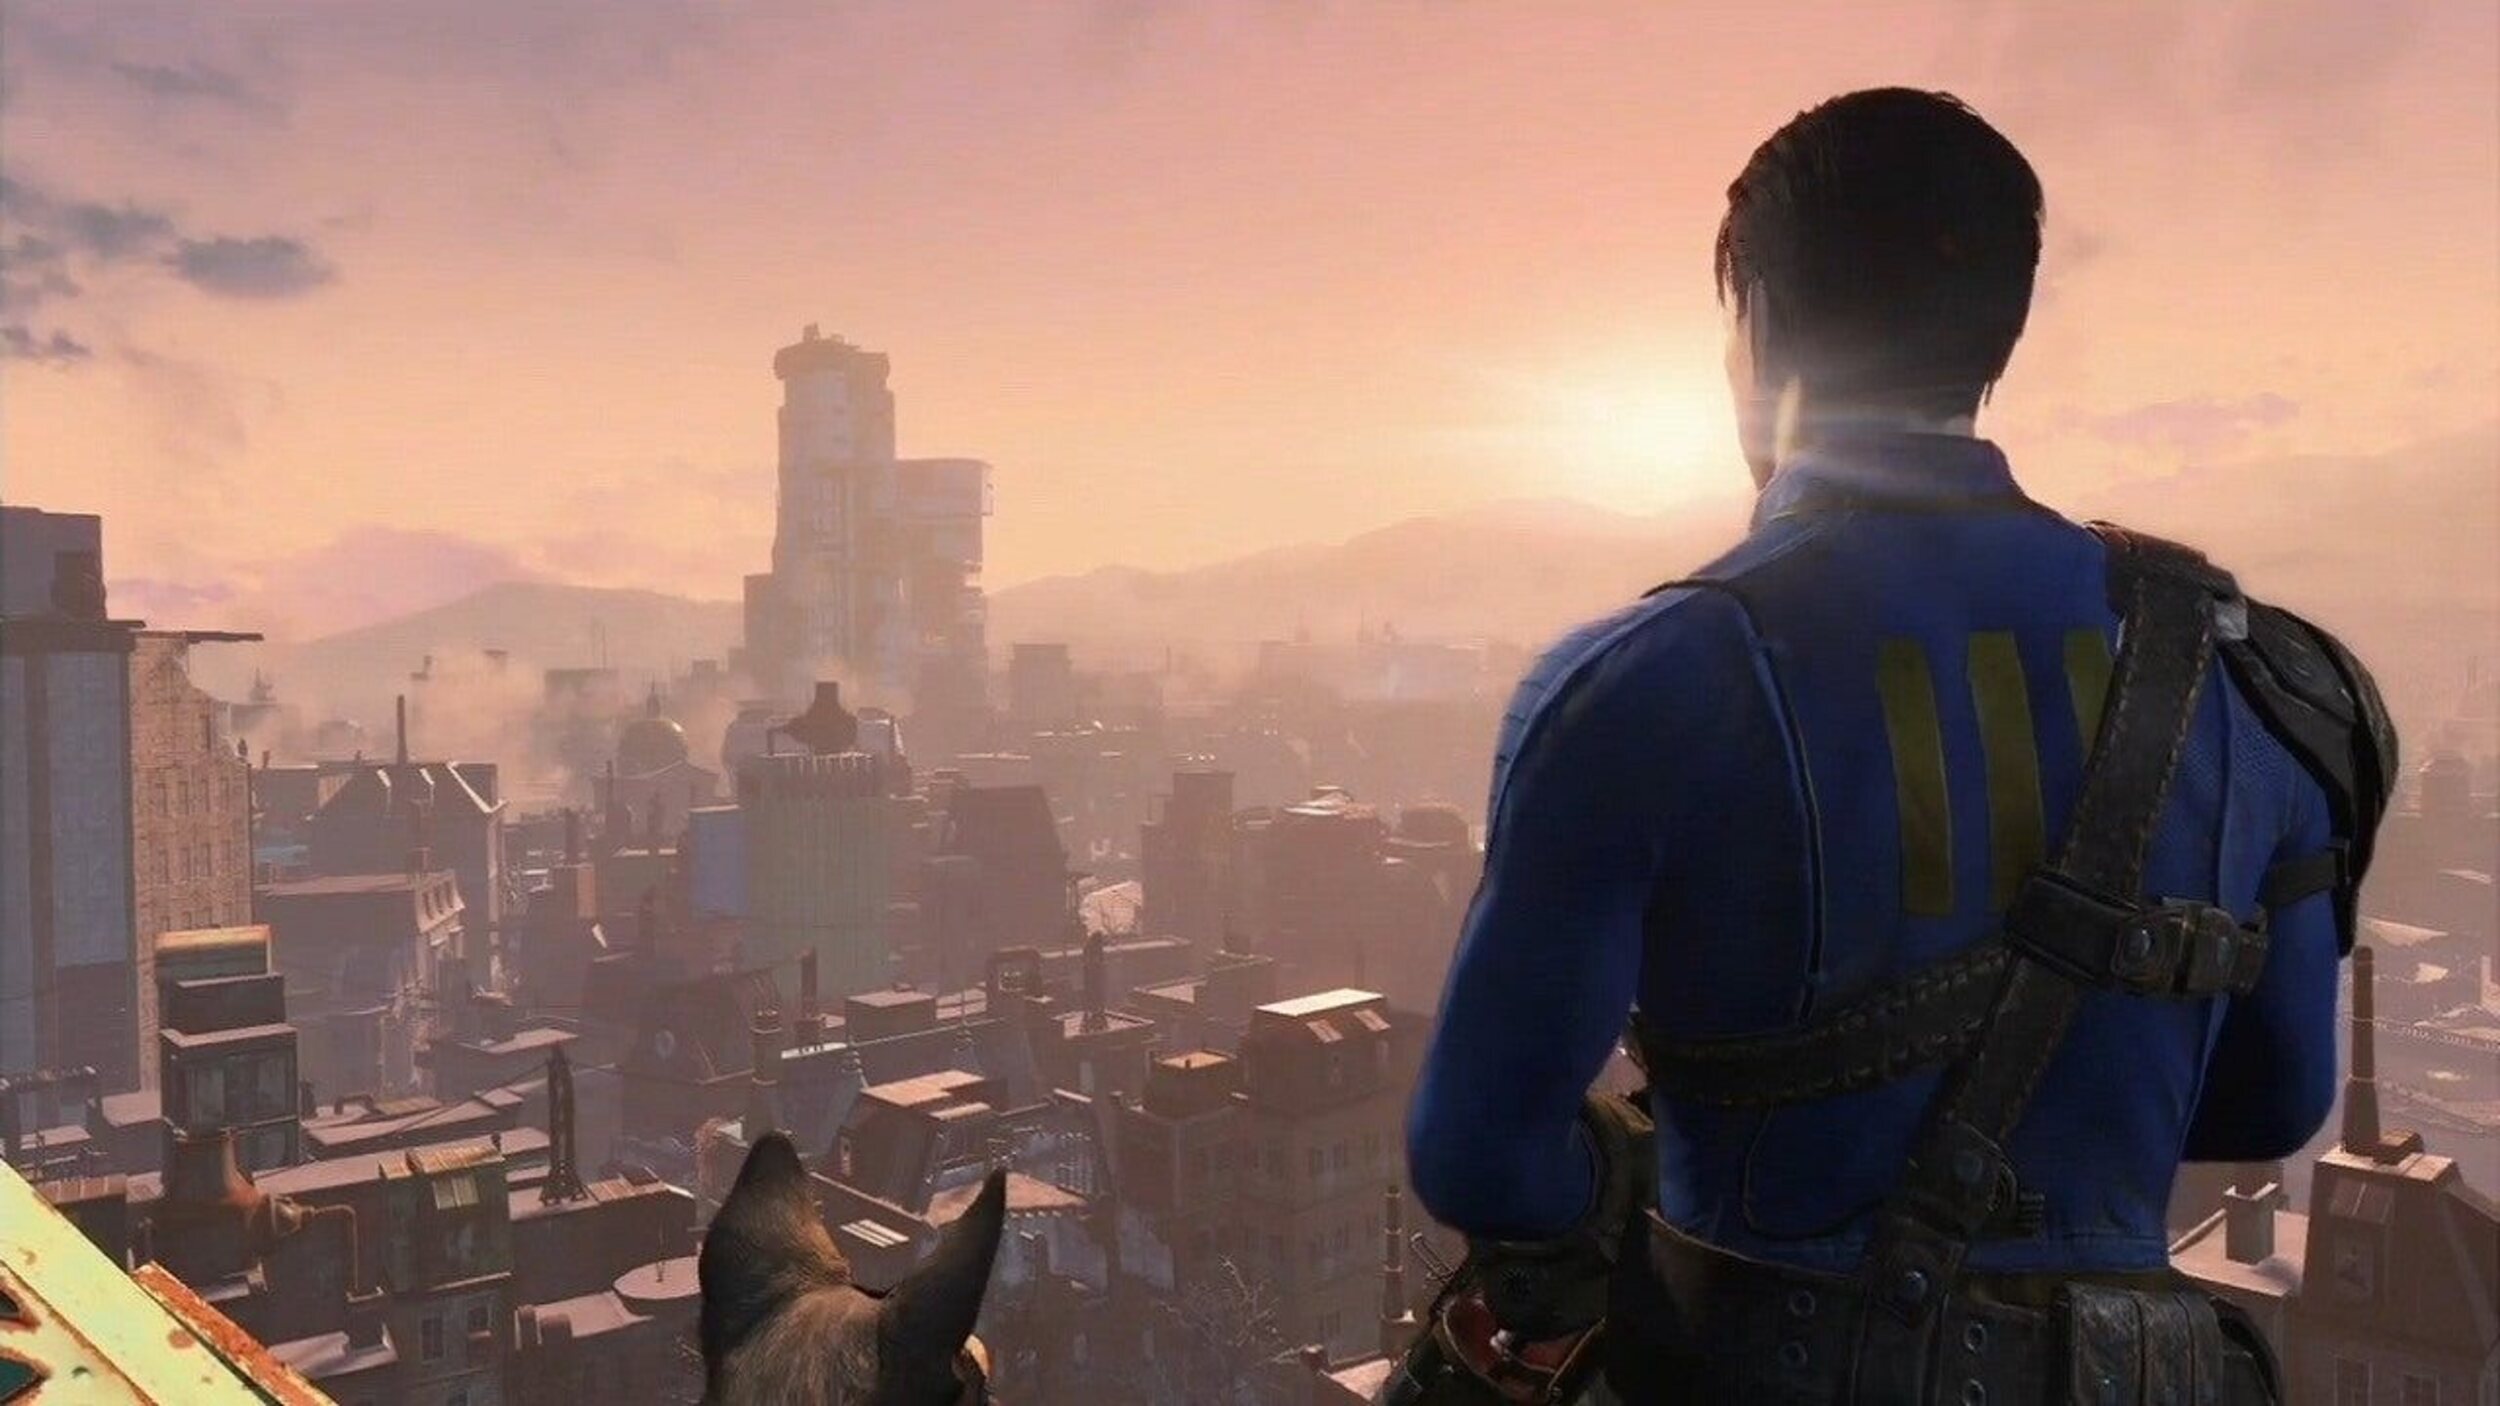 'Fallout 4'